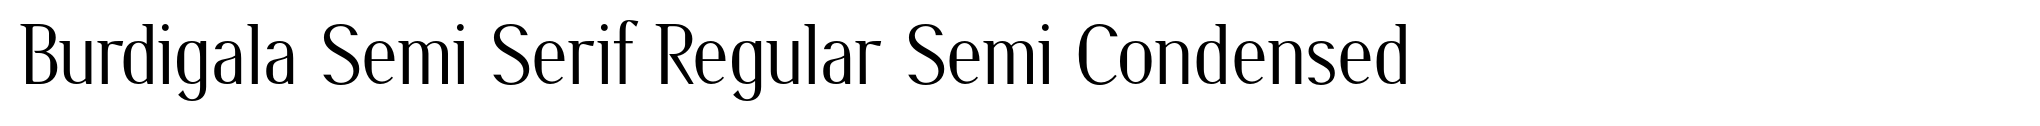 Burdigala Semi Serif Regular Semi Condensed image